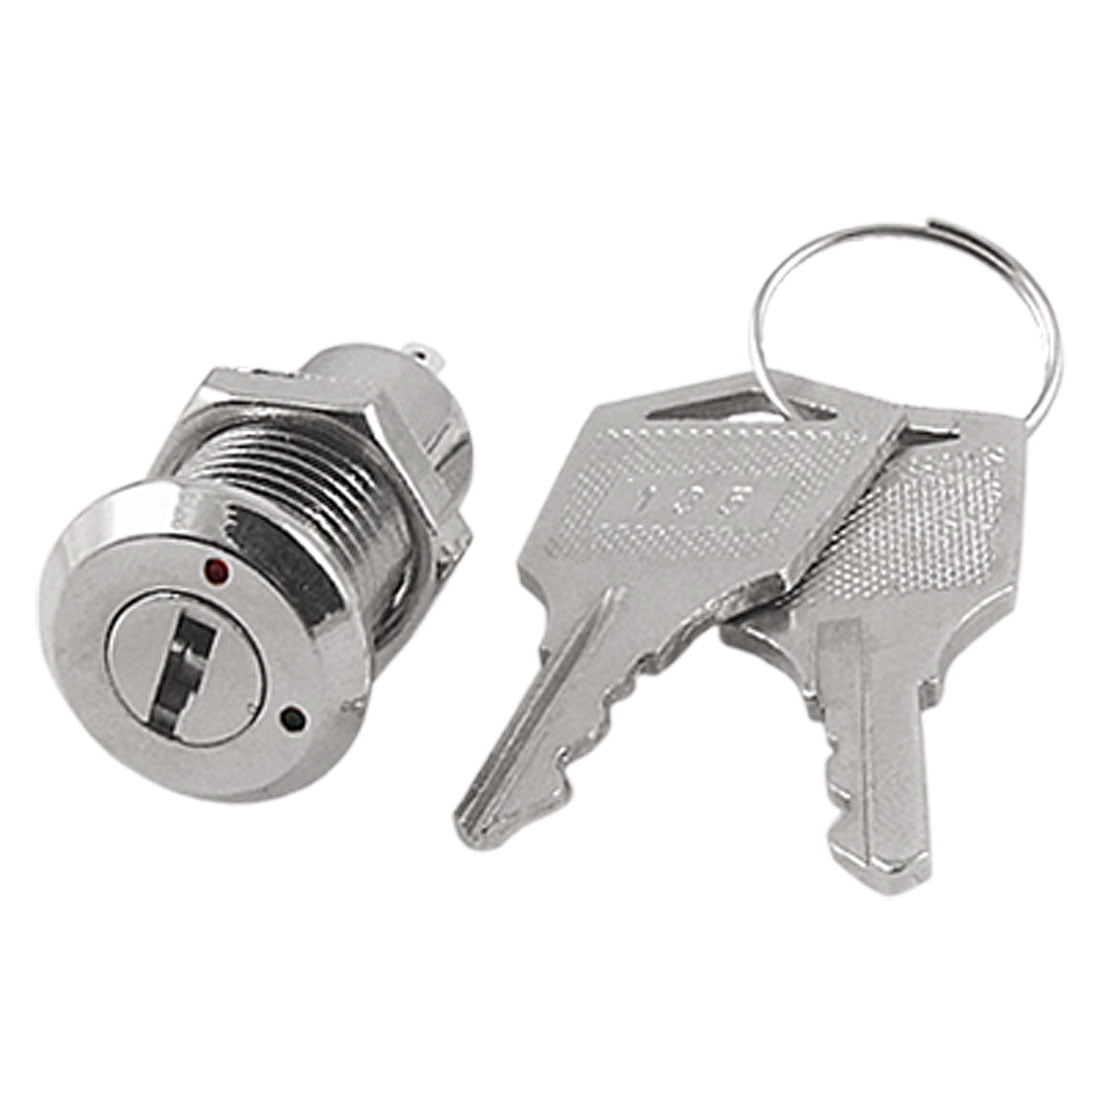 Keys 2 Position SPST New v ed On/Off Metal Security Key Switch Lock 